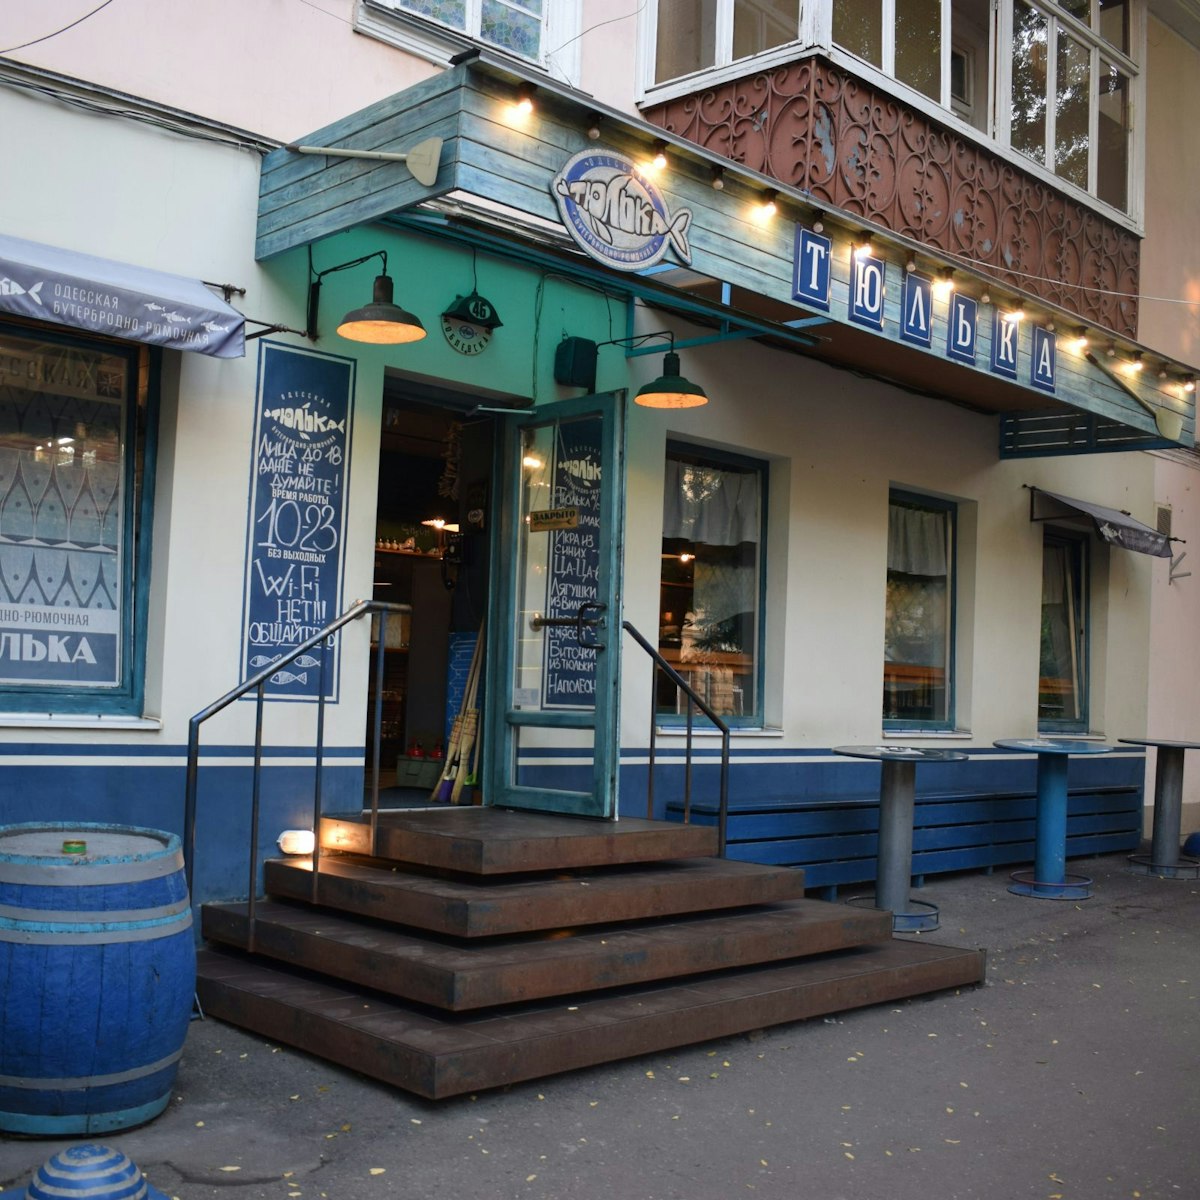 The entrance to Tyulka restaurant in Odesa